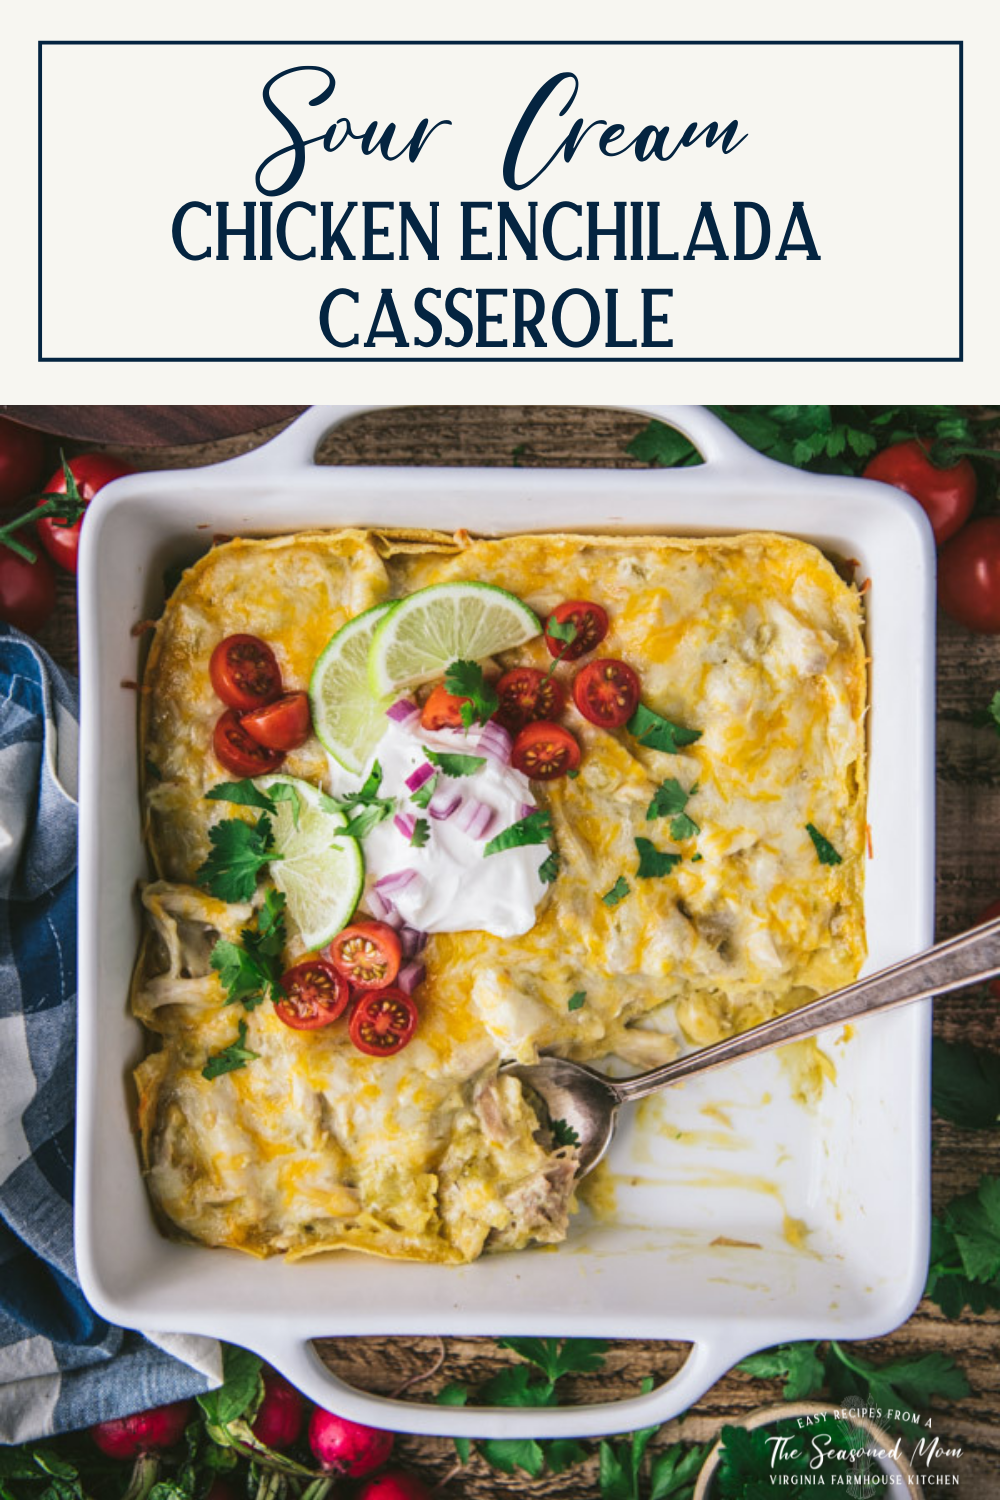 Chicken Enchilada Casserole with Sour Cream - The Seasoned Mom